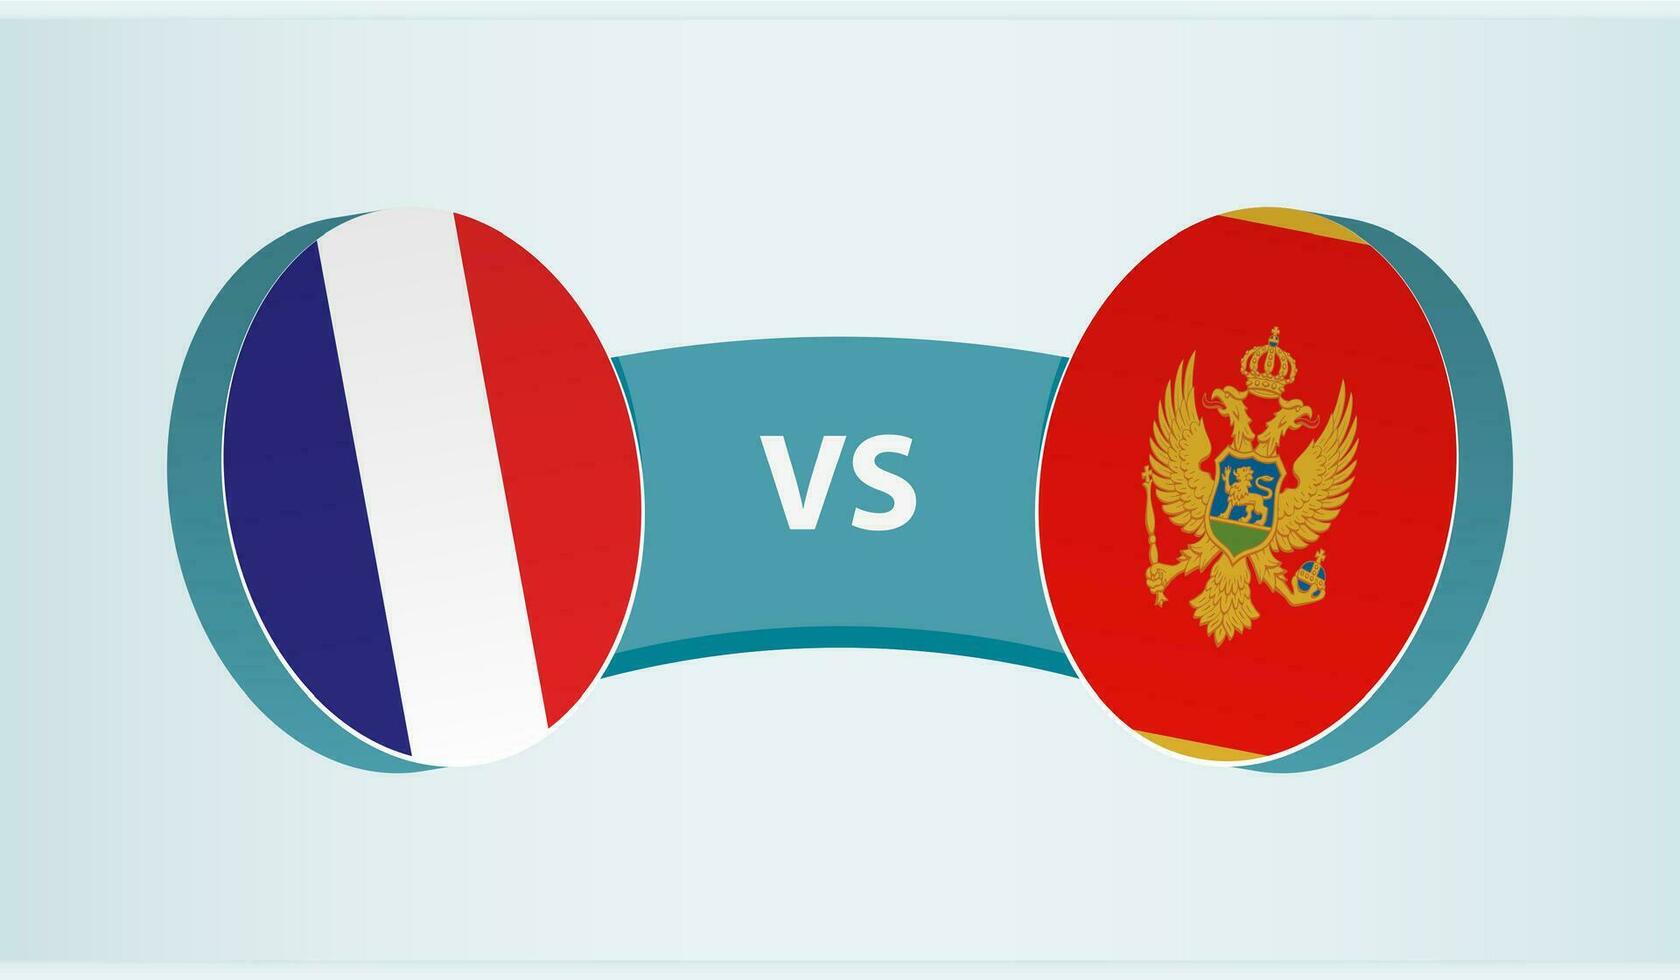 France versus Montenegro, team sports competition concept. vector